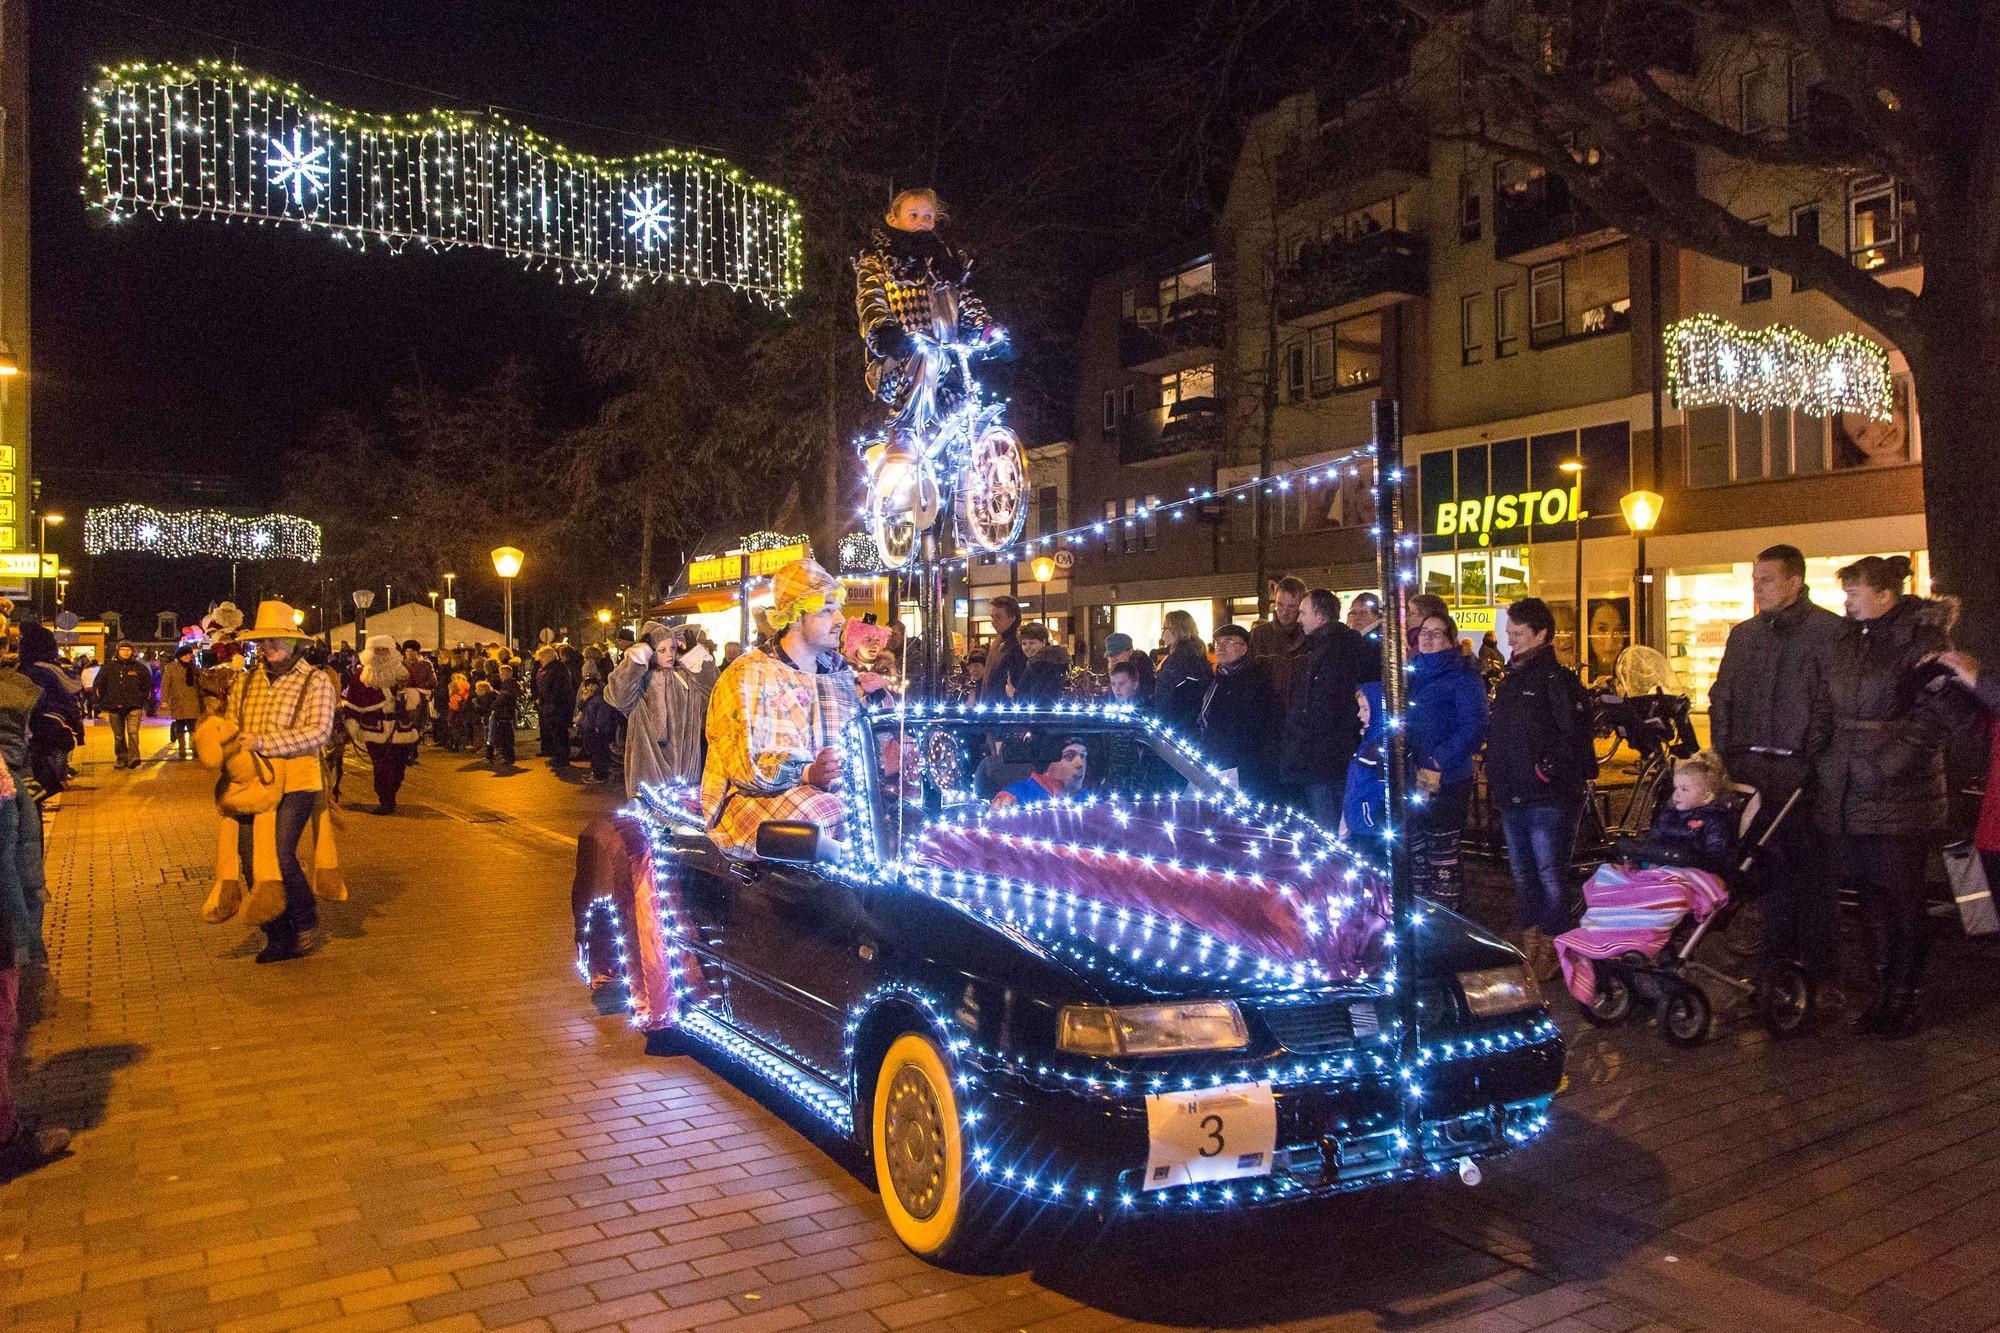 Kerstmarkt Winterland Assen start met lichtjesparade